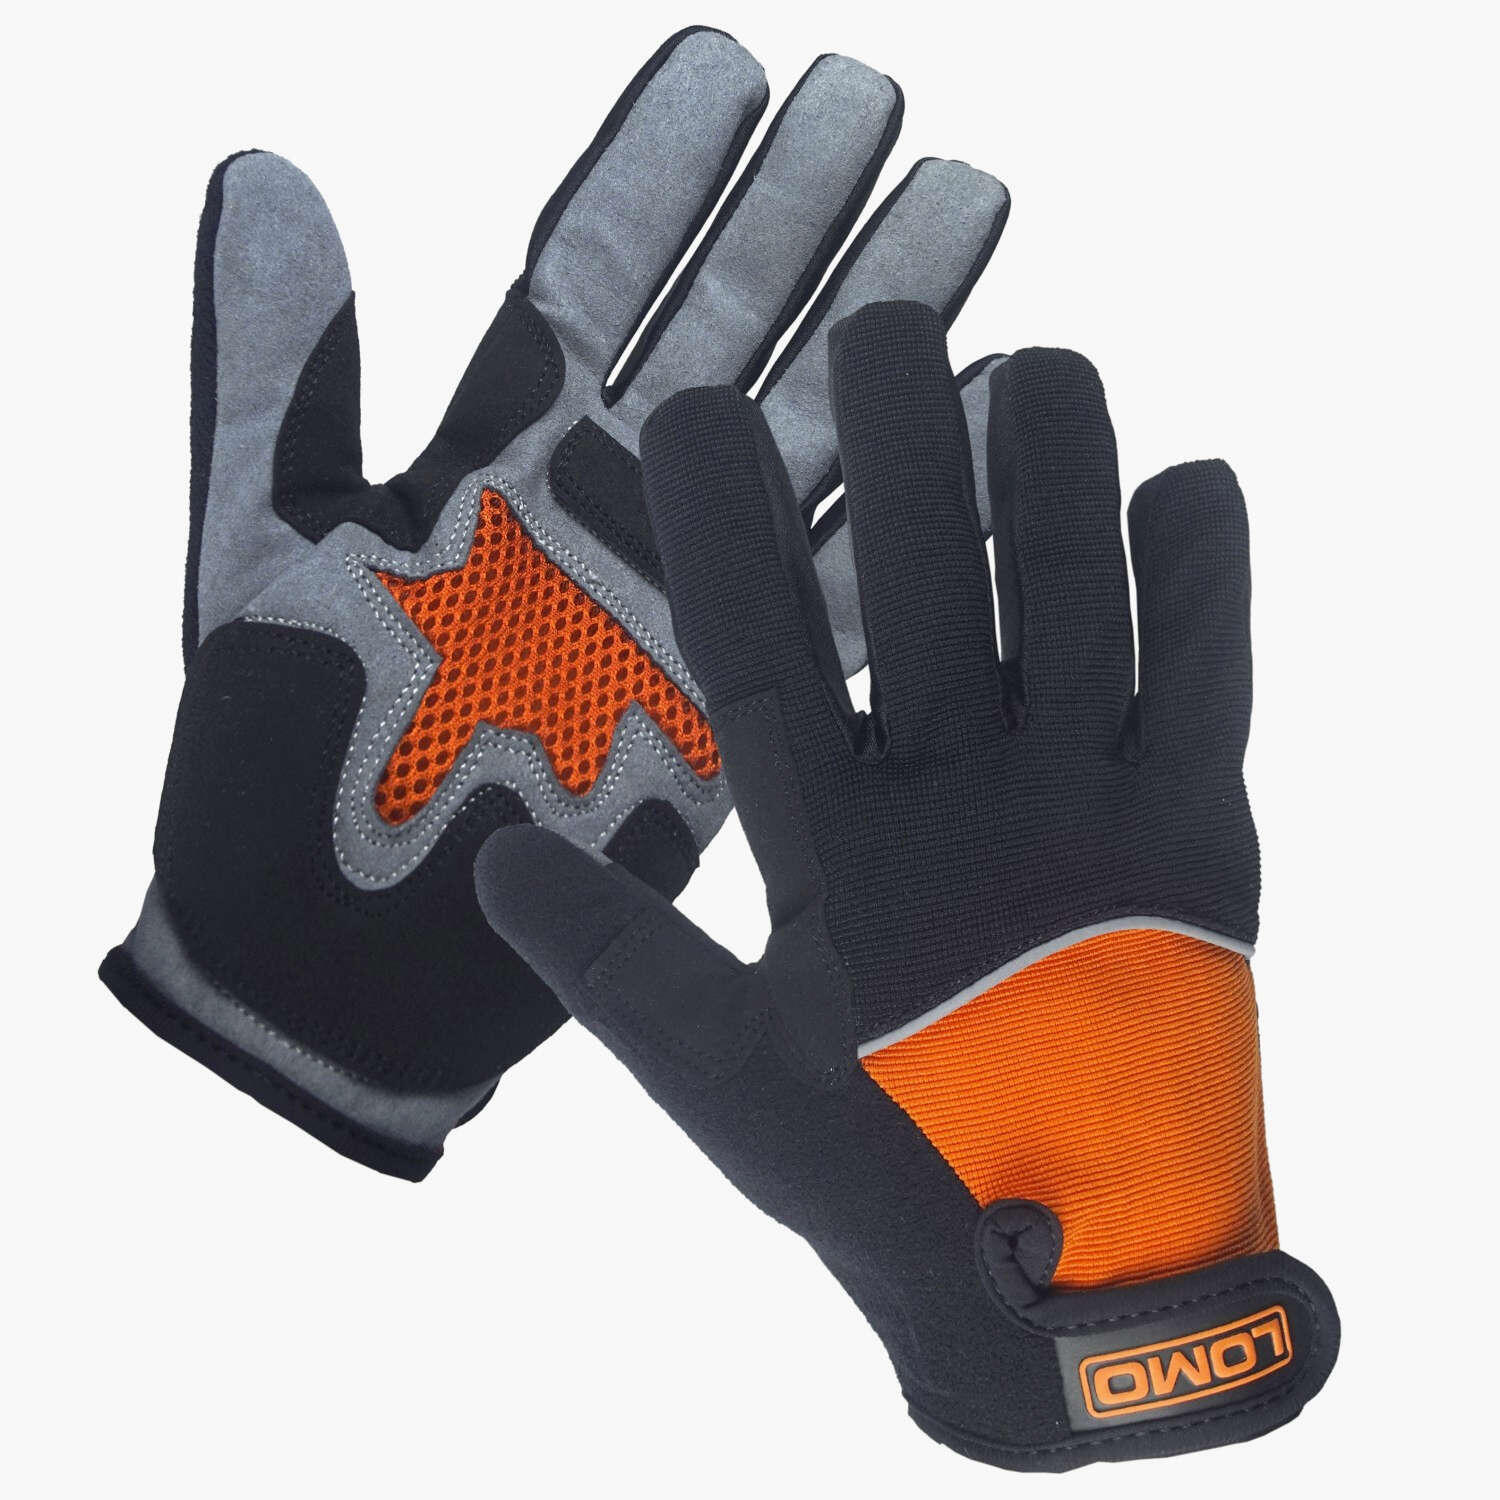 Lomo Mountain Bike Gloves - Black / Grey / Orange 3/8